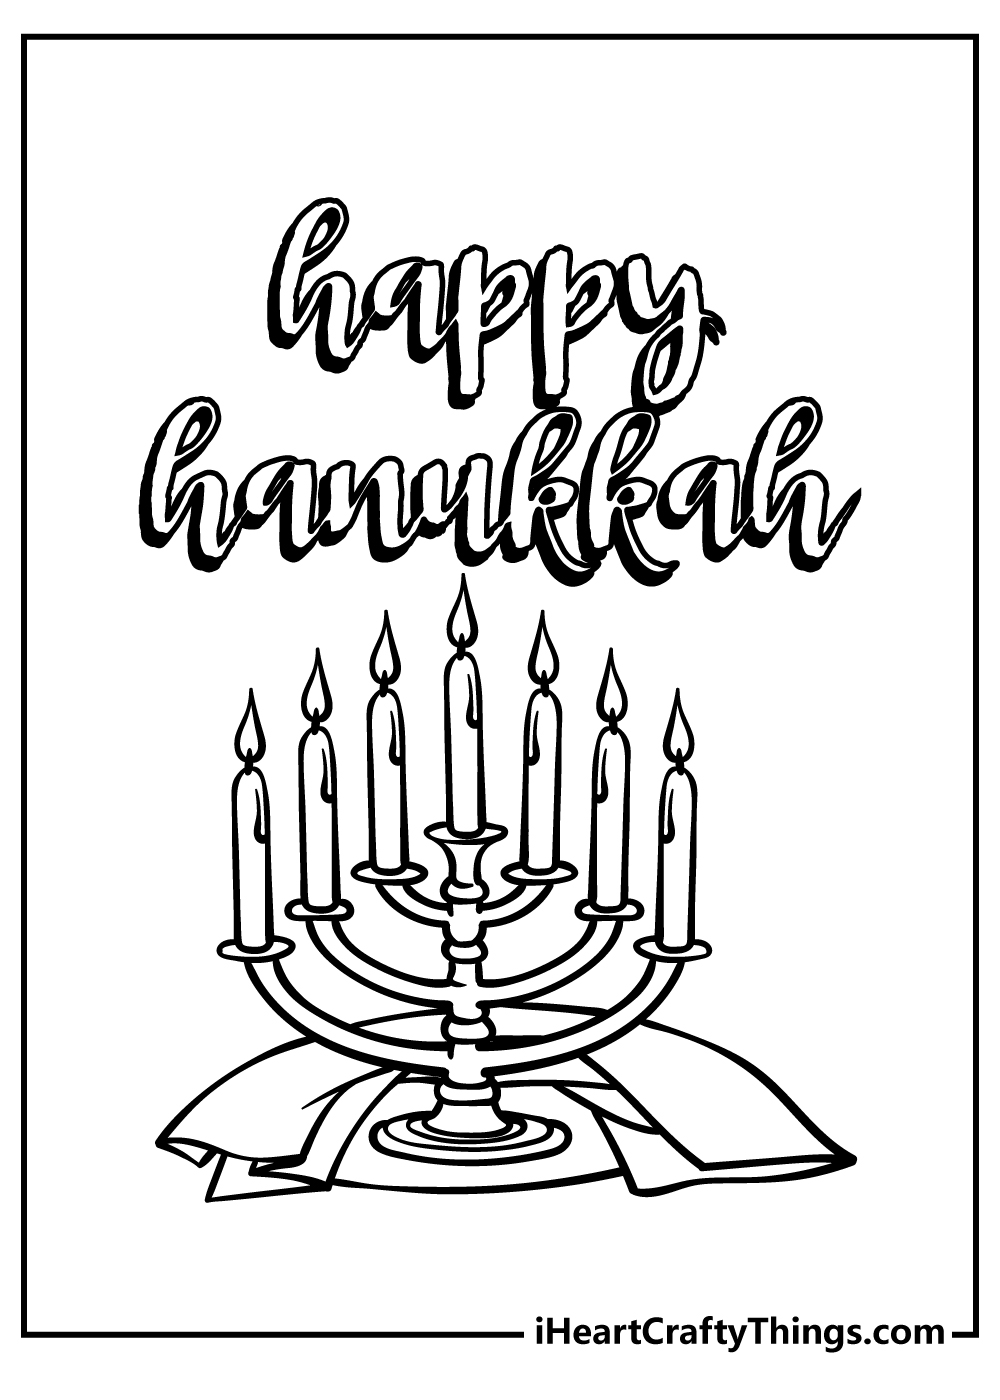 Hanukkah Coloring Sheet for children free download